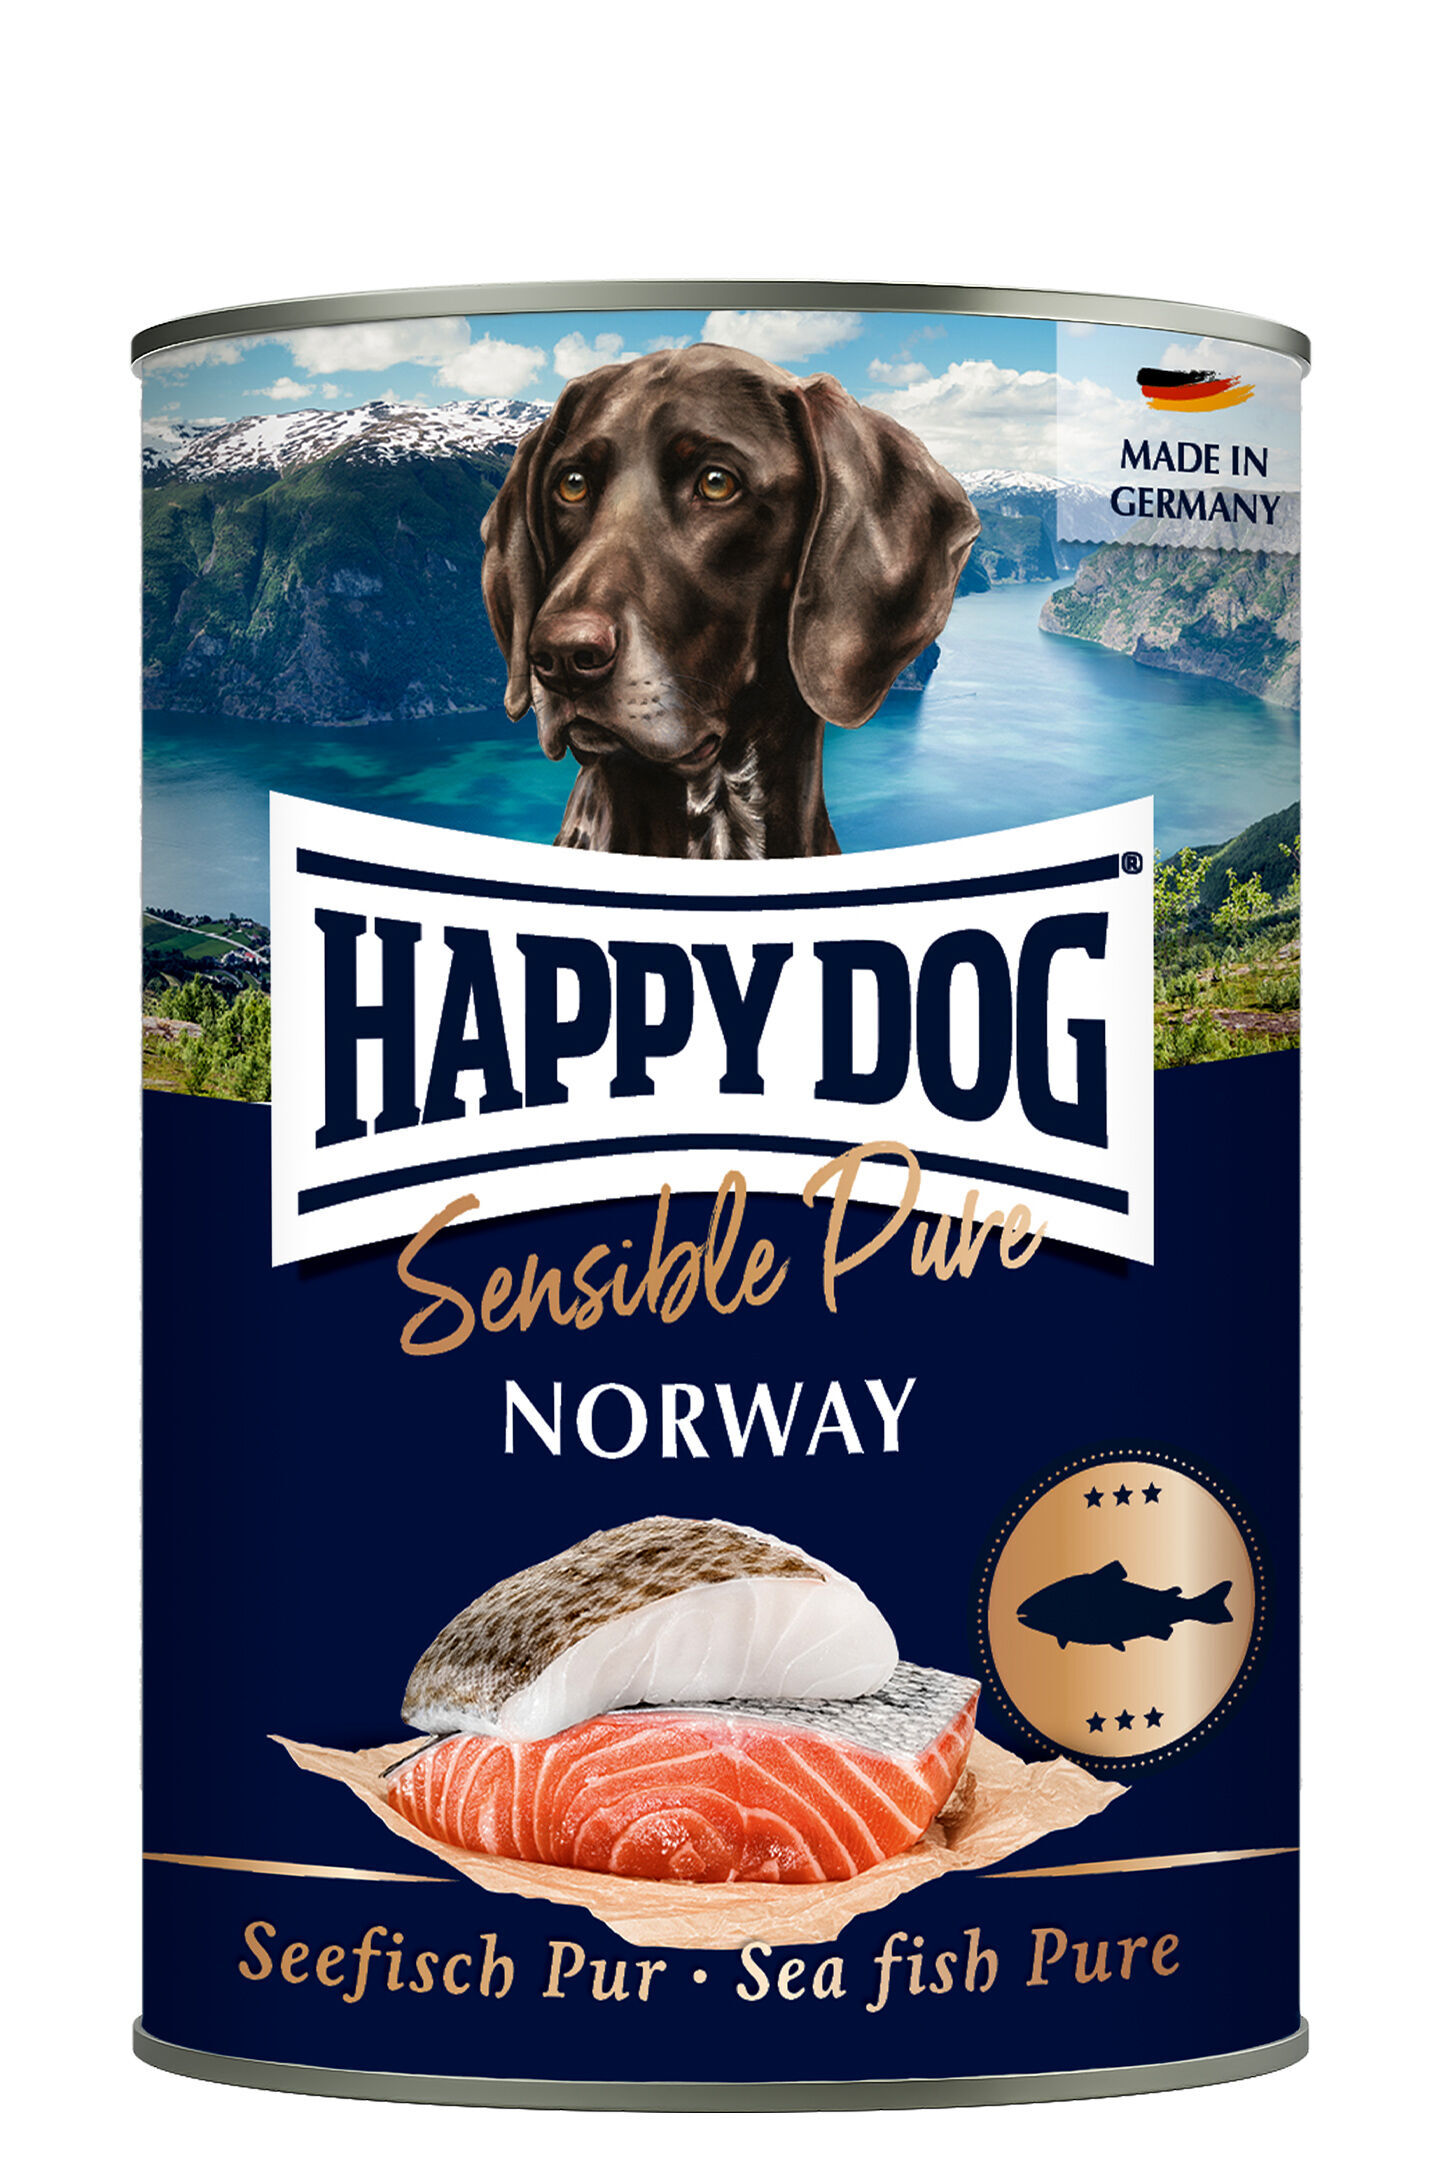 Sensible Pure Norway (Havsfisk)